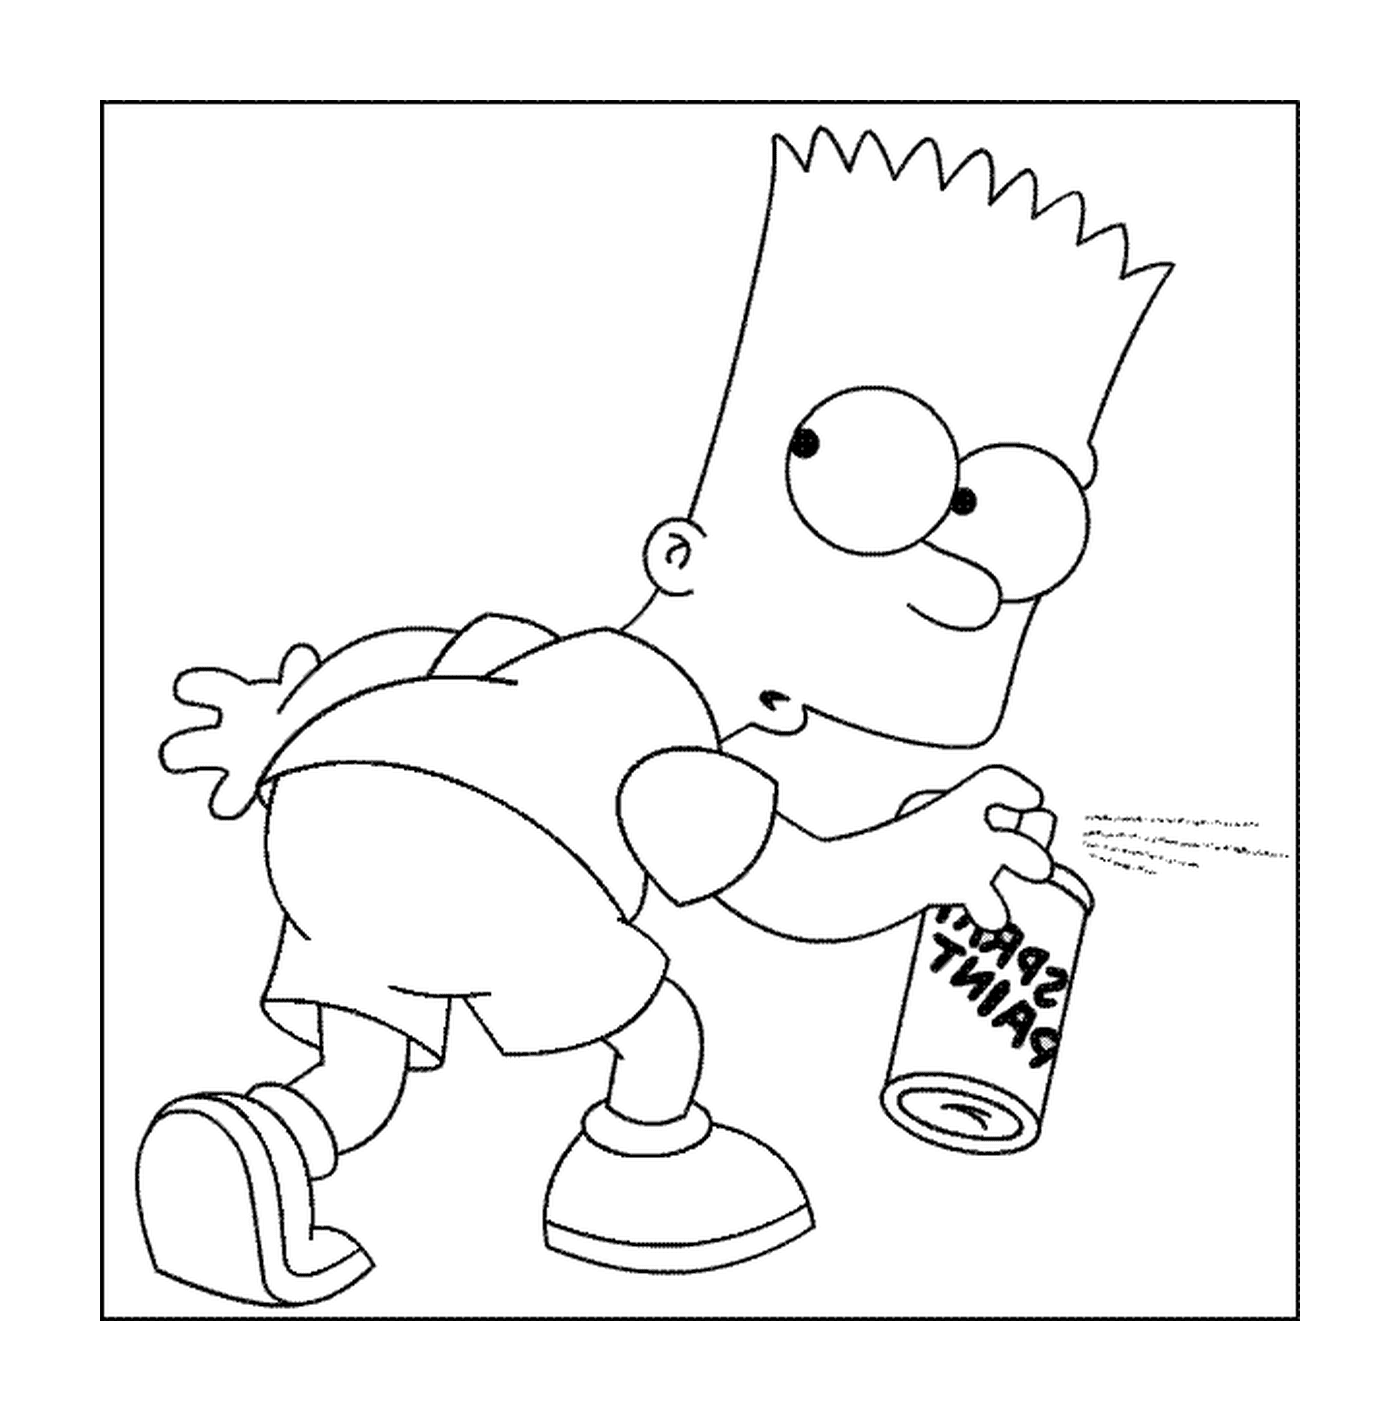  Bart hace una etiqueta 